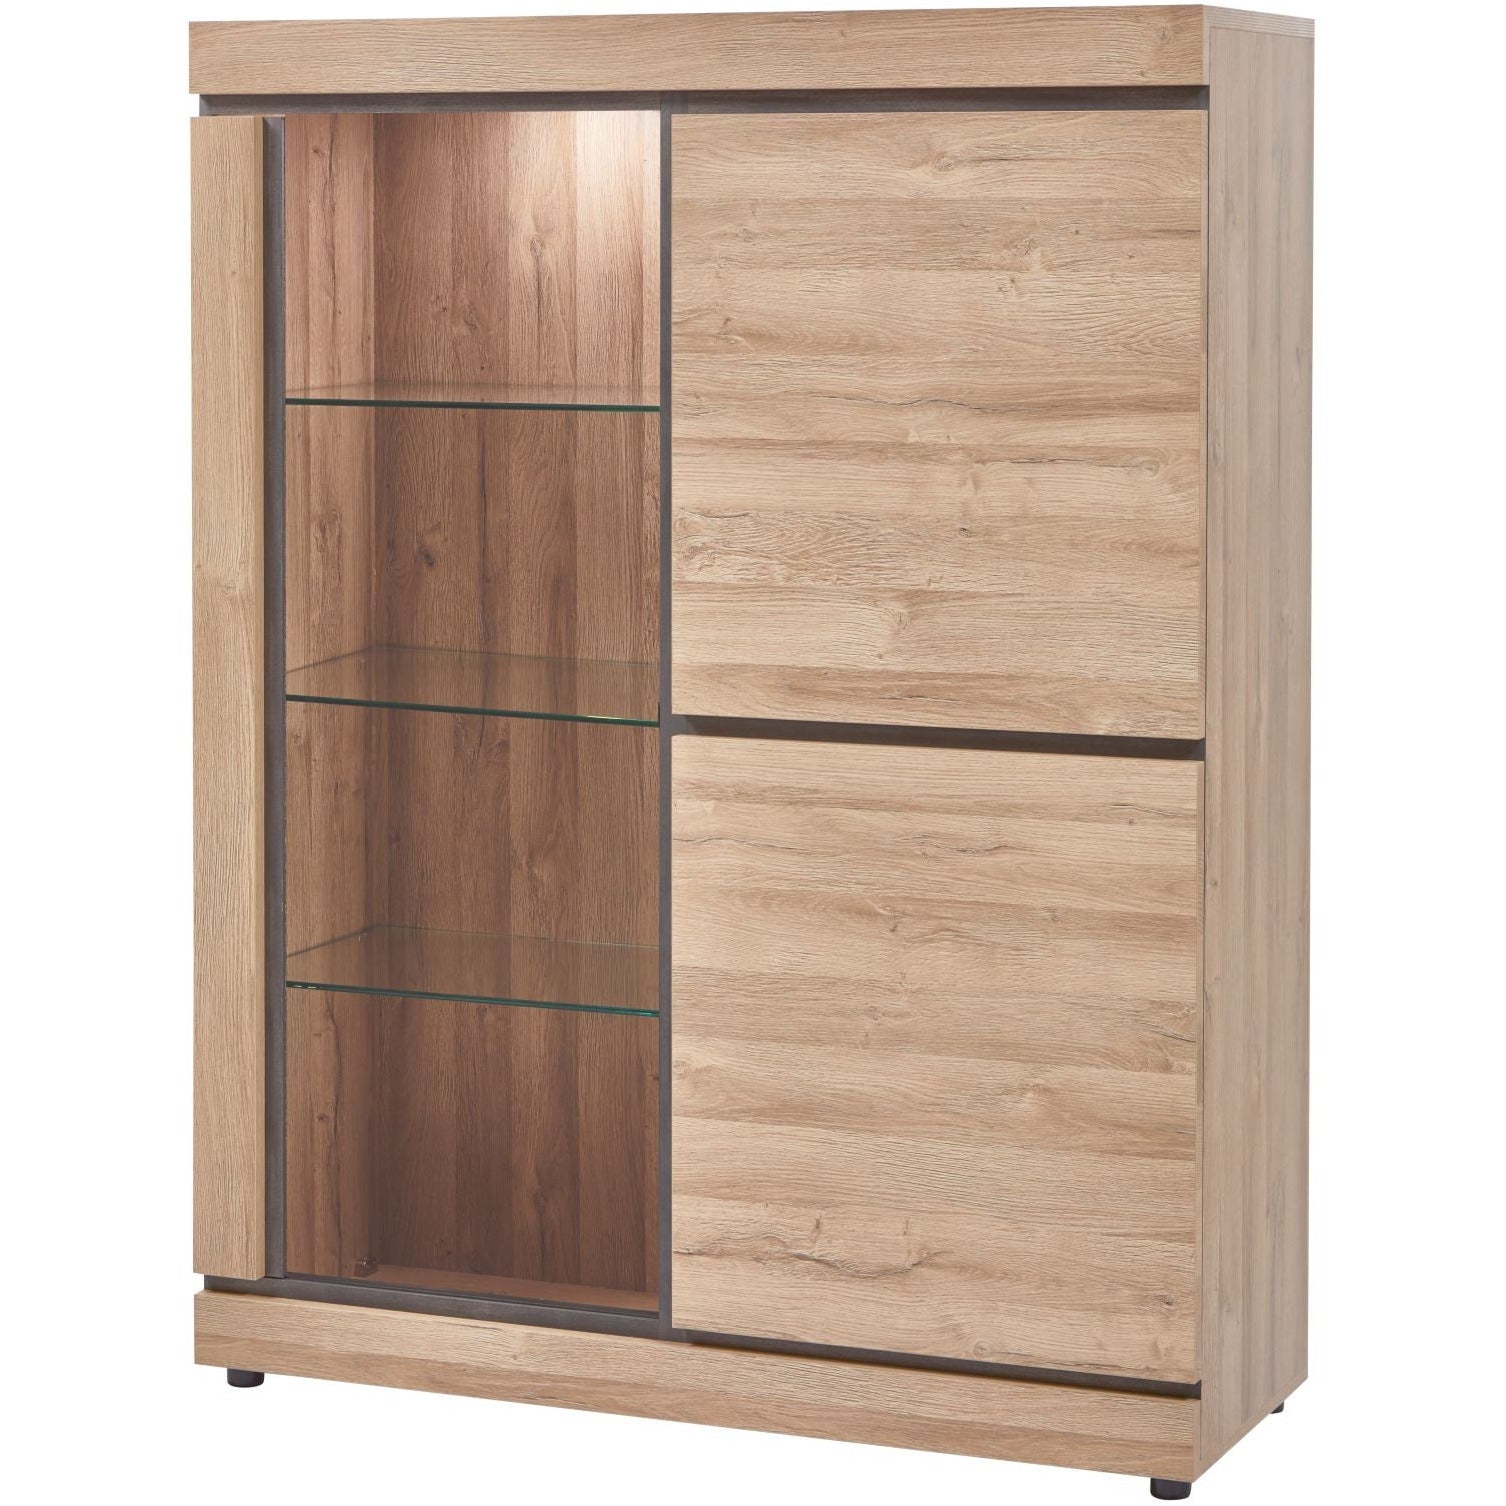 Wall cabinet | Furniture series Talenso | natural, gray, brown | 130